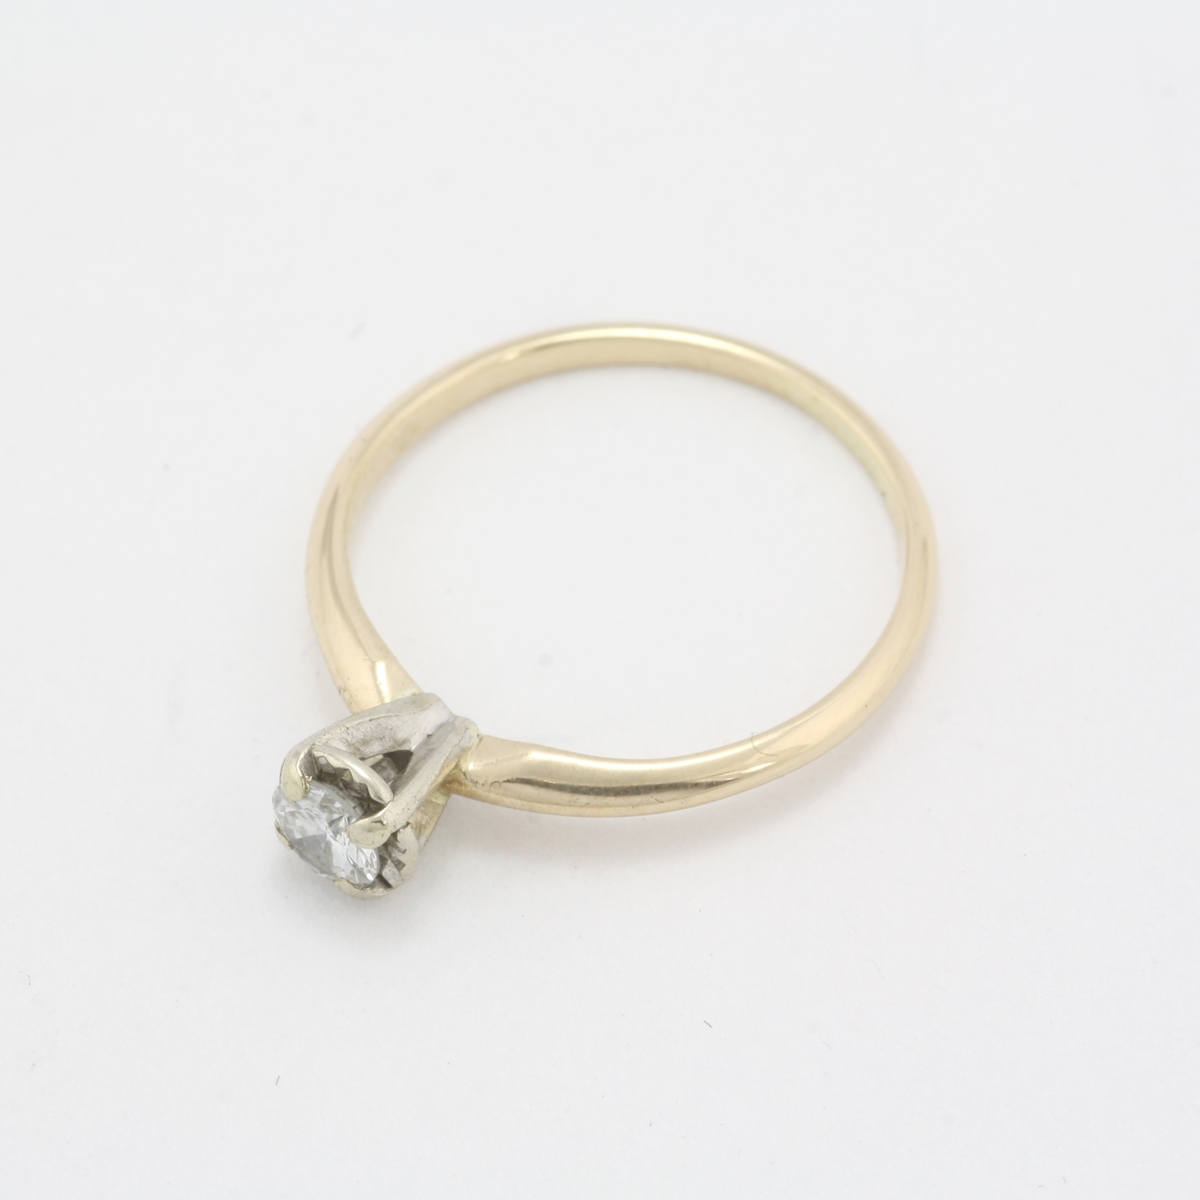 Pre-Owned 14 Karat Yellow Gold Diamond Solitair Engagement Ring